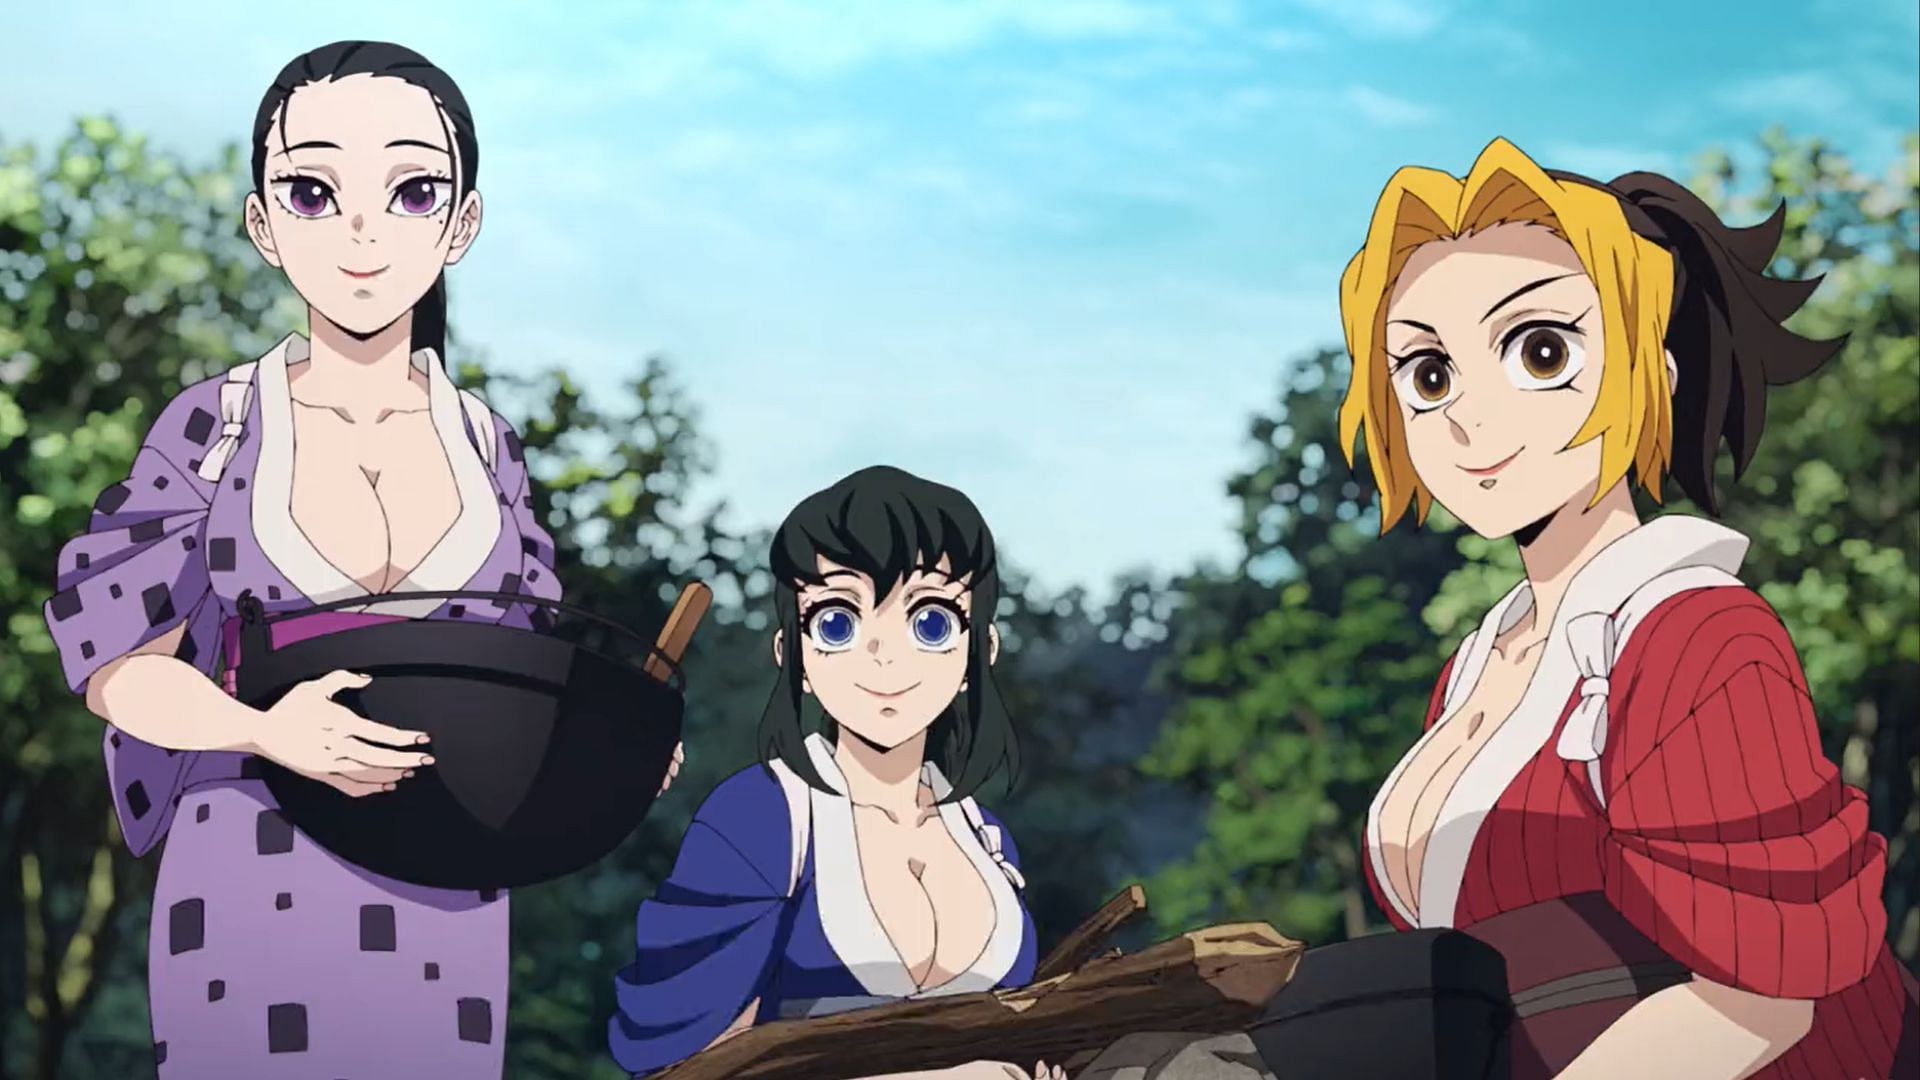 Hinatsuru, Makio, and Suma as seen in Demon Slayer (Image via Ufotable)